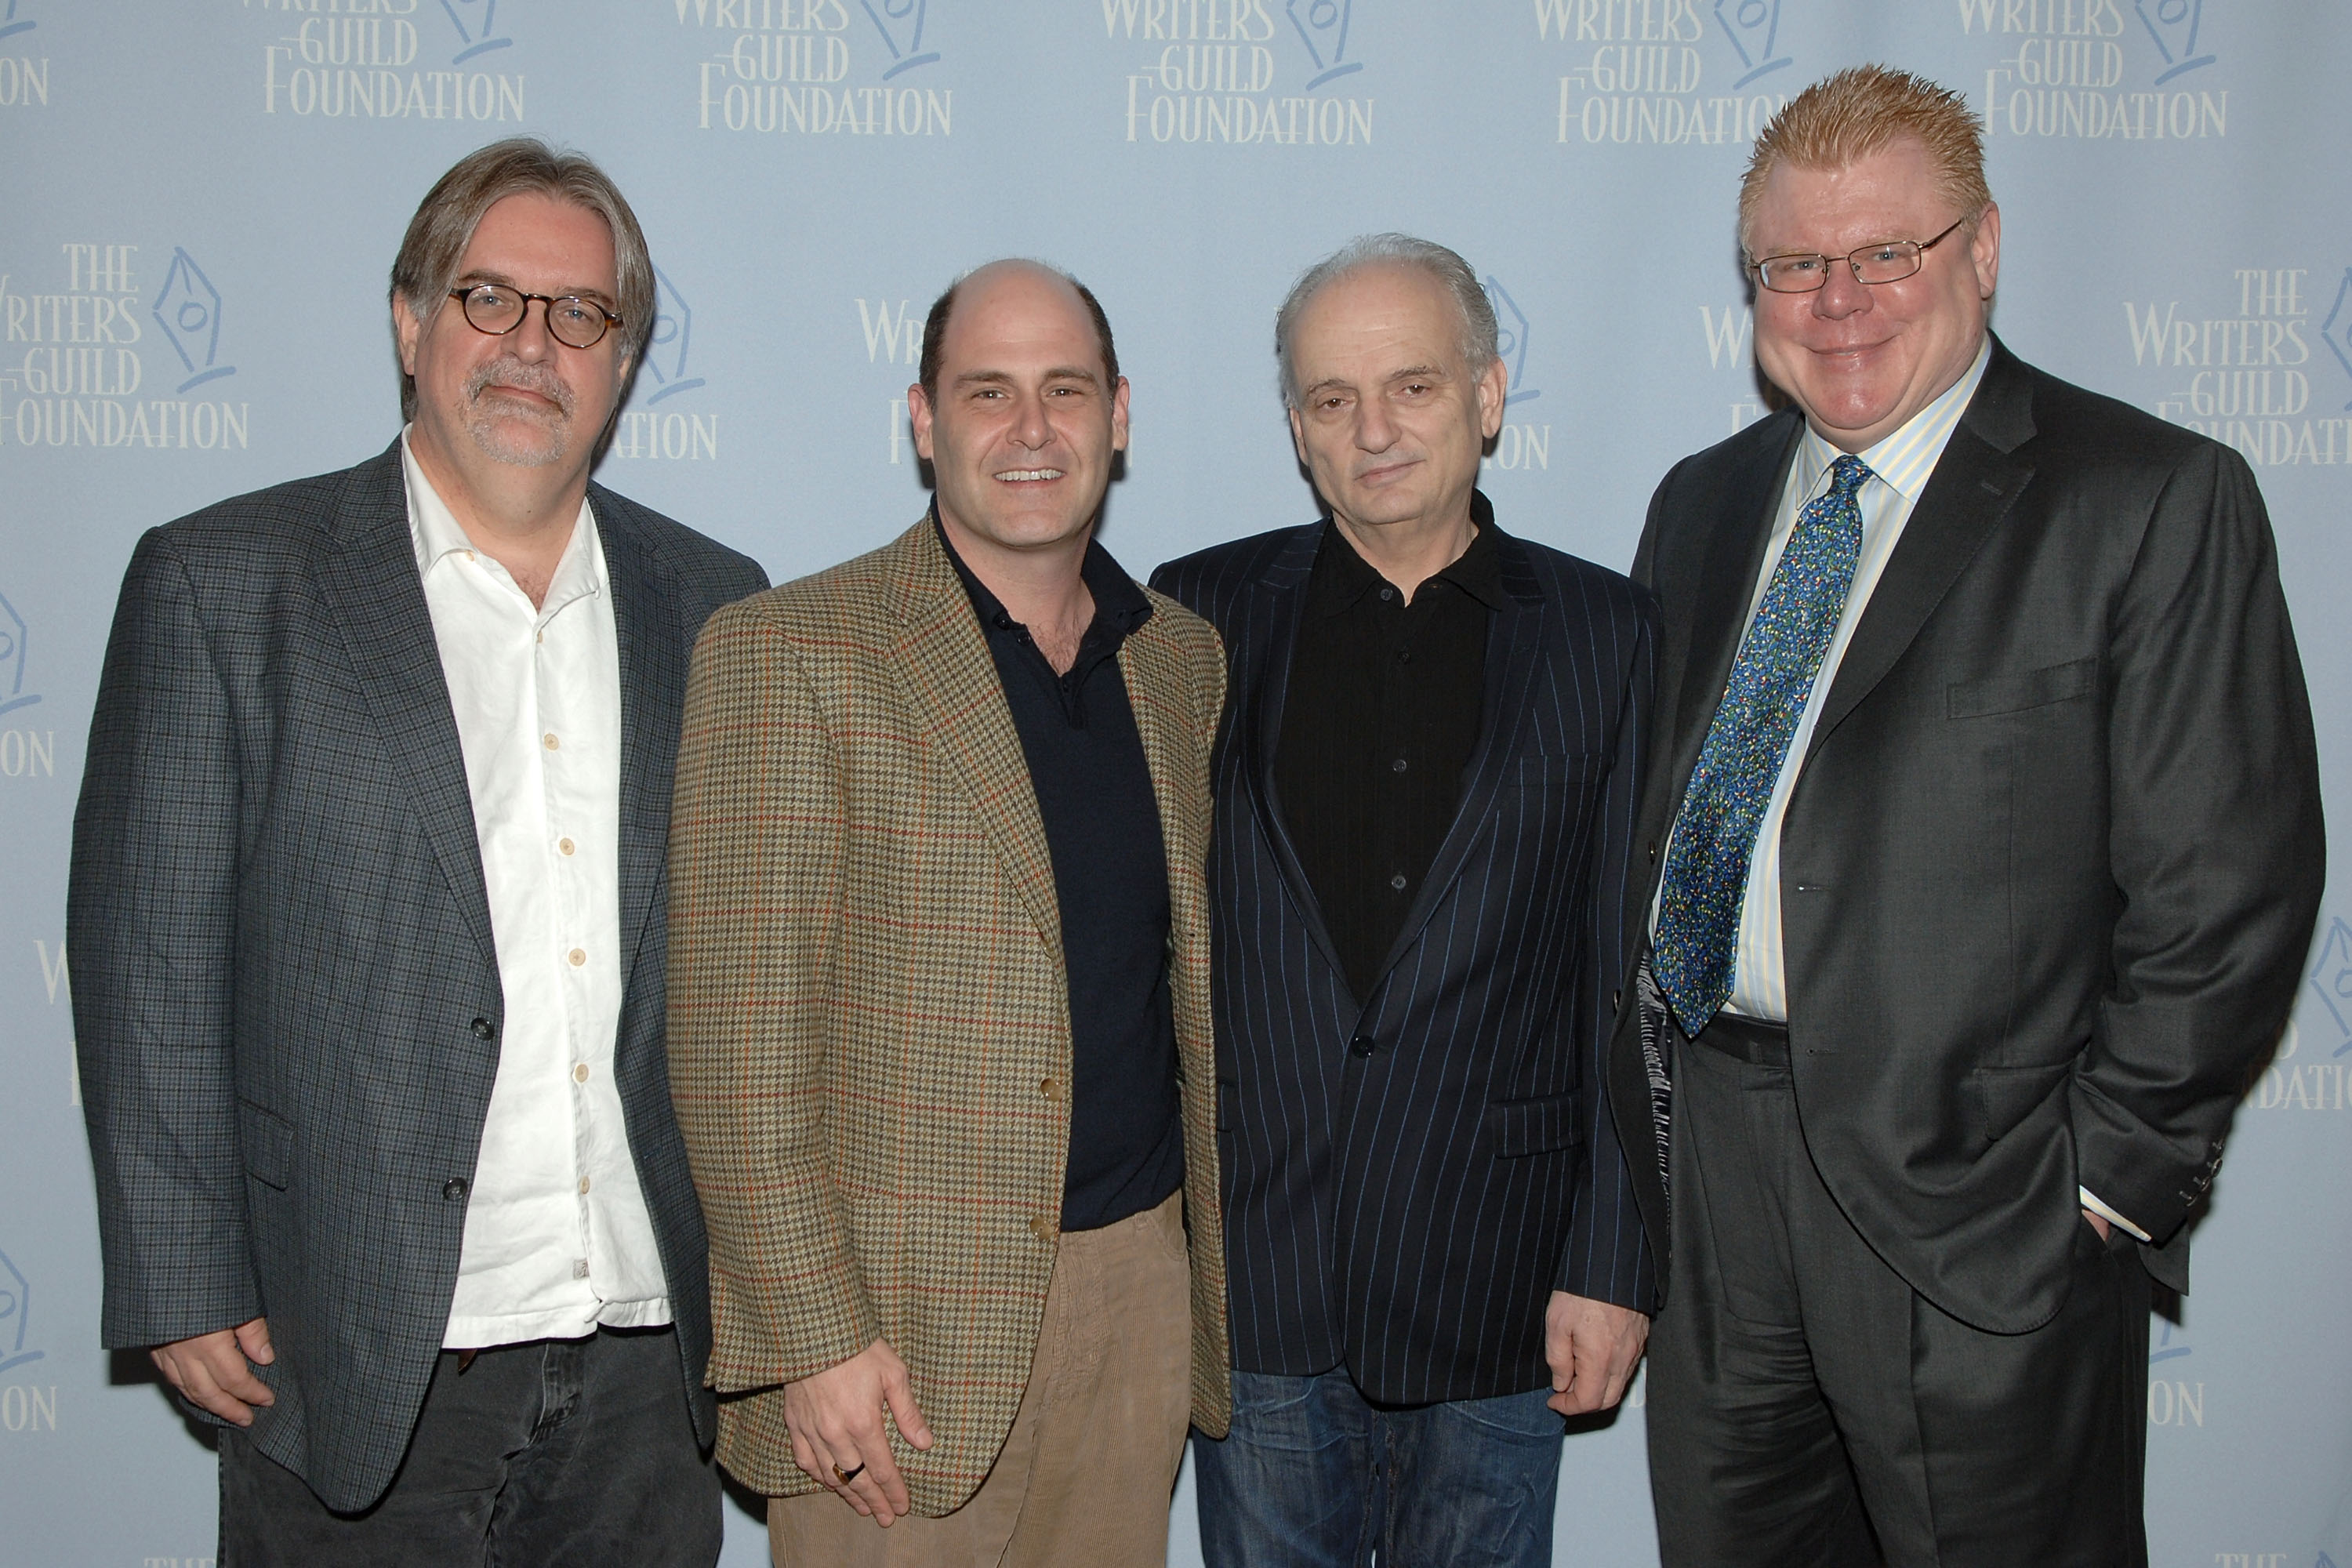 Matt Groenig, Matthew Weiner, David Chase and Daniel Petrie Jr. pose together at a 2008 event.